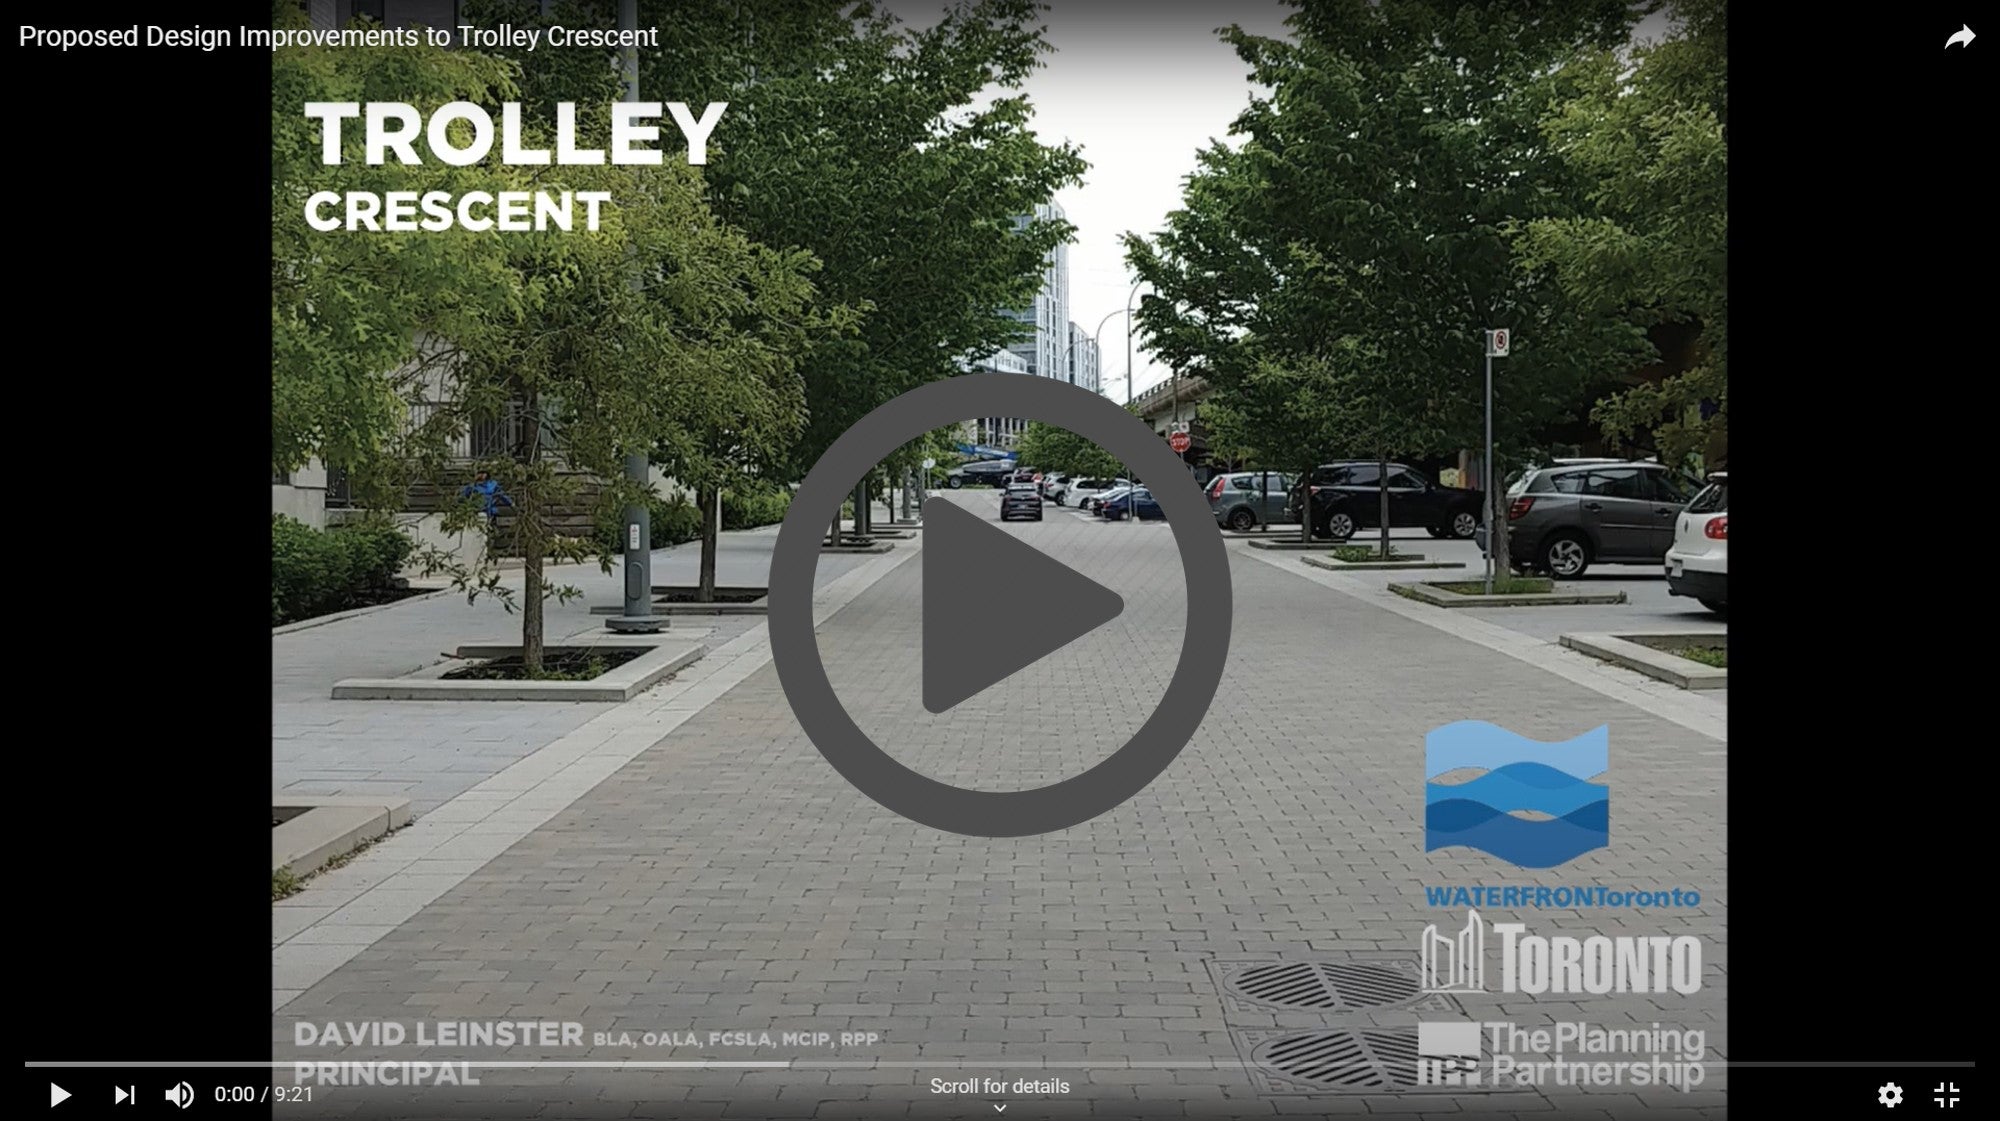 Trolley Crescent video presentation